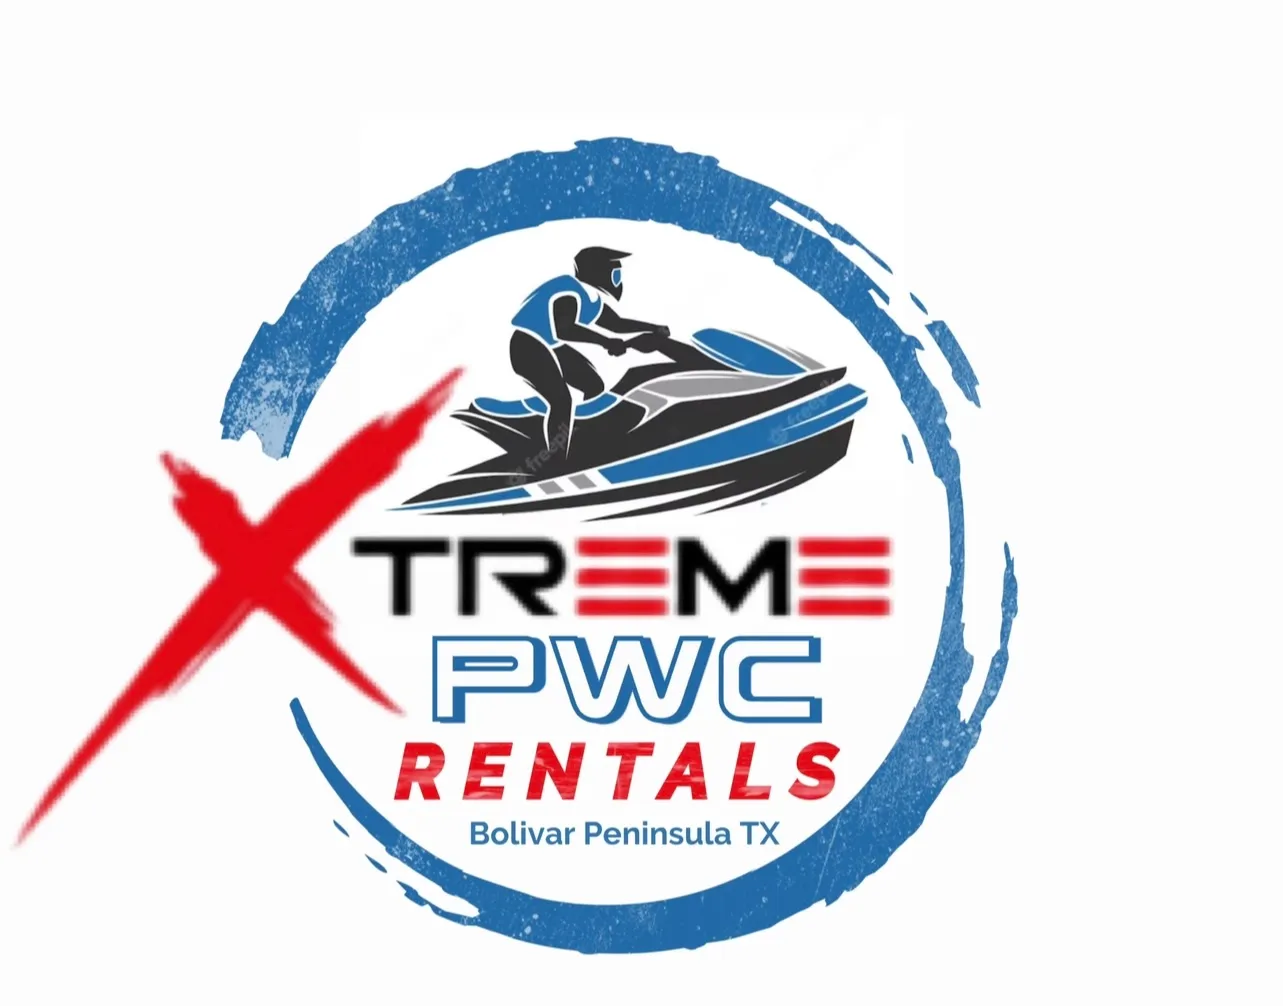 Xtreme PWC Rentals